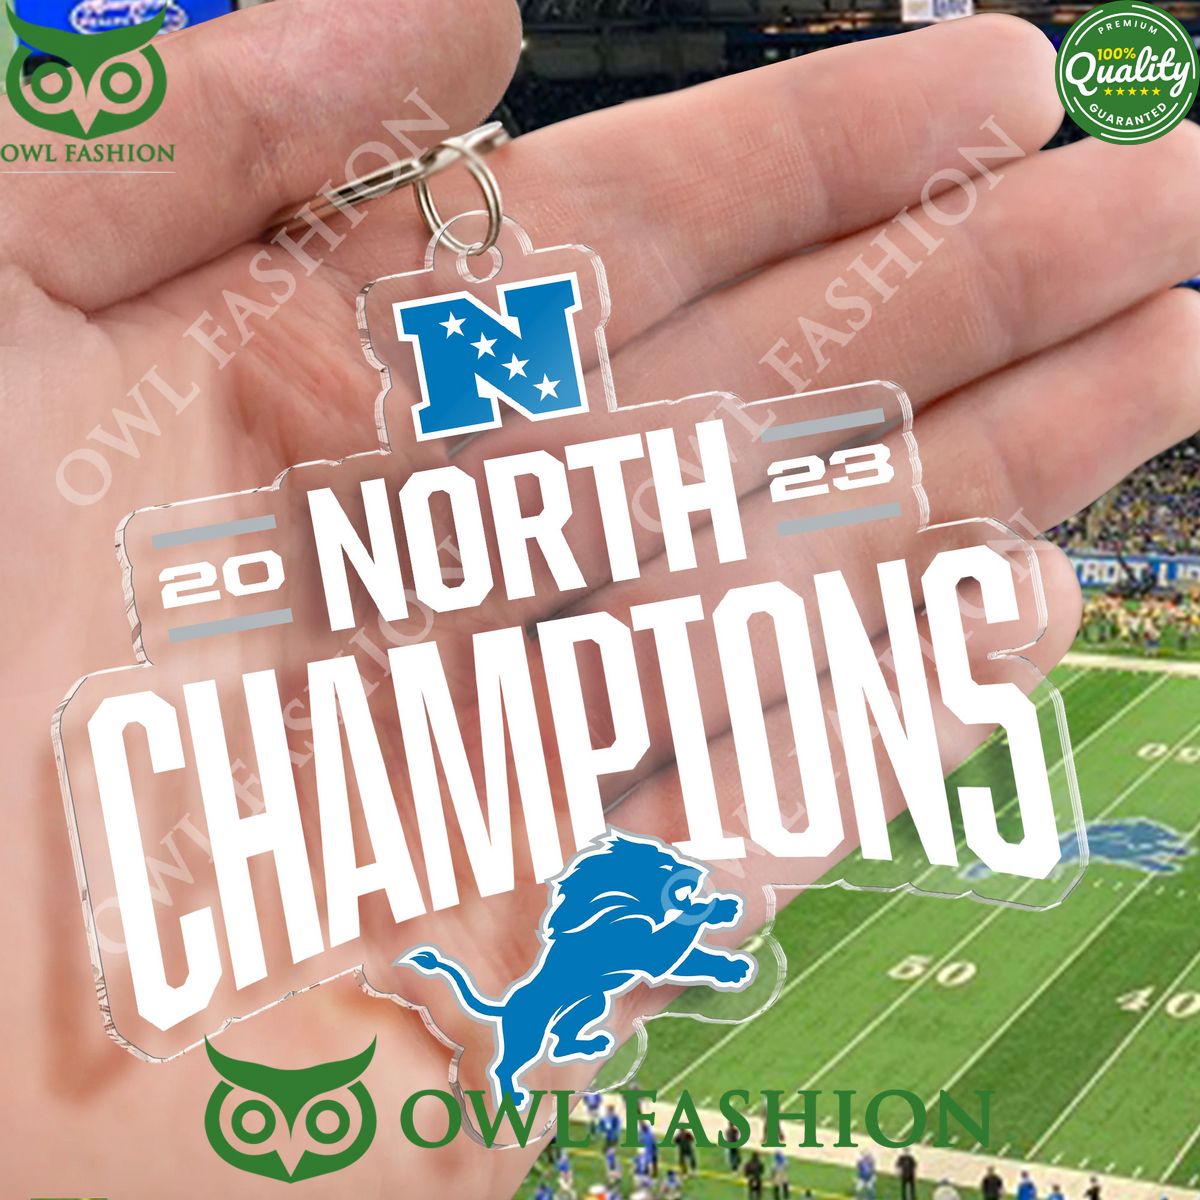 Acrylic keychain 2023 NFC North Champions Detroit Lions Ornament